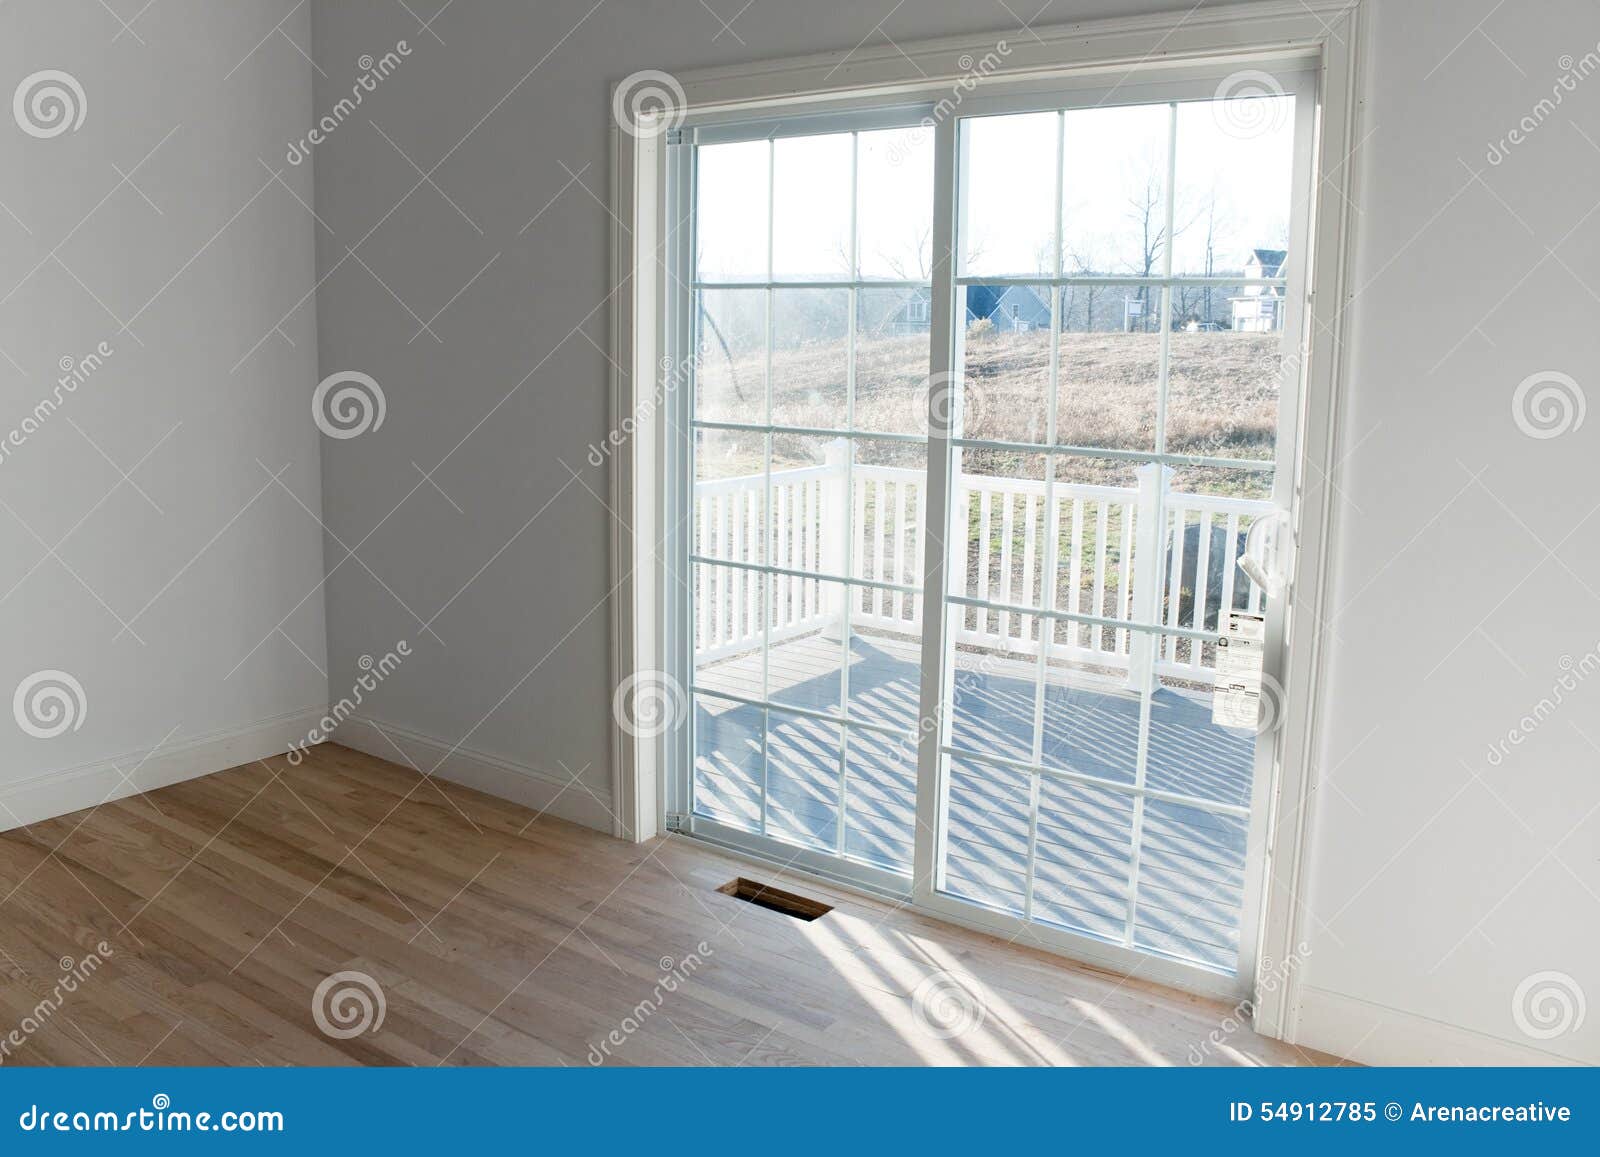 Interior Sliding Glass Doors Stock Image Image Of Living